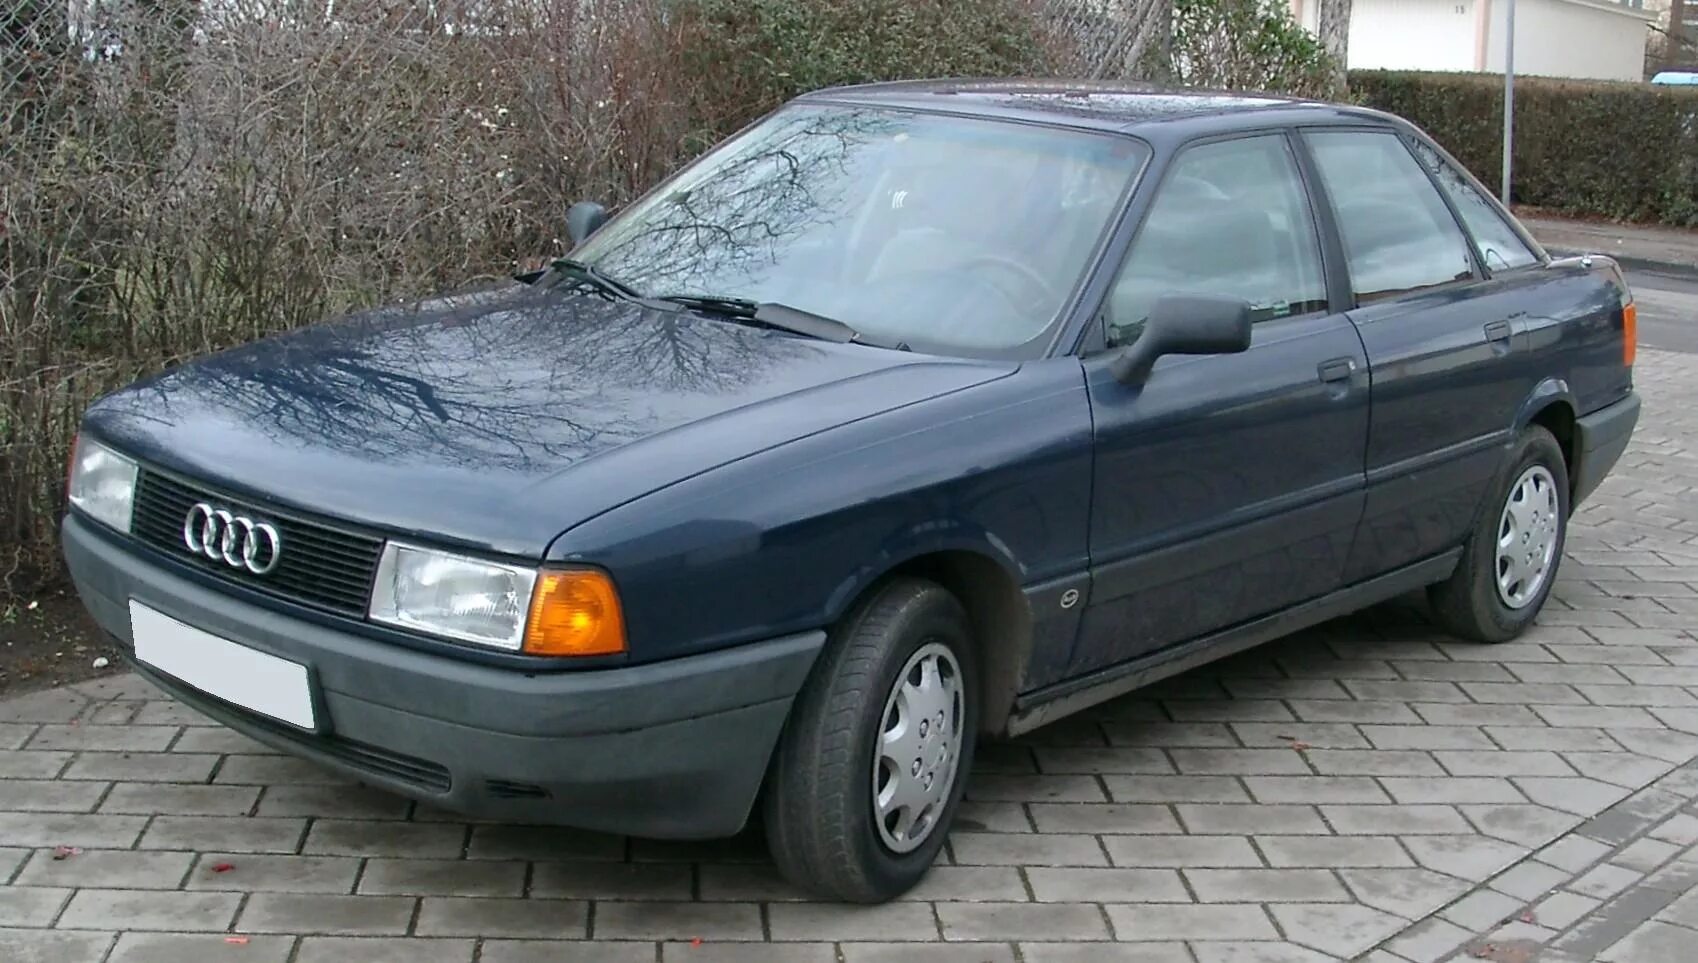 Ауди 80 левое крыло. Ауди 80 б3. Ауди 80 б3 1989. Ауди 80 b3 1990. Audi 80 b3 1991.